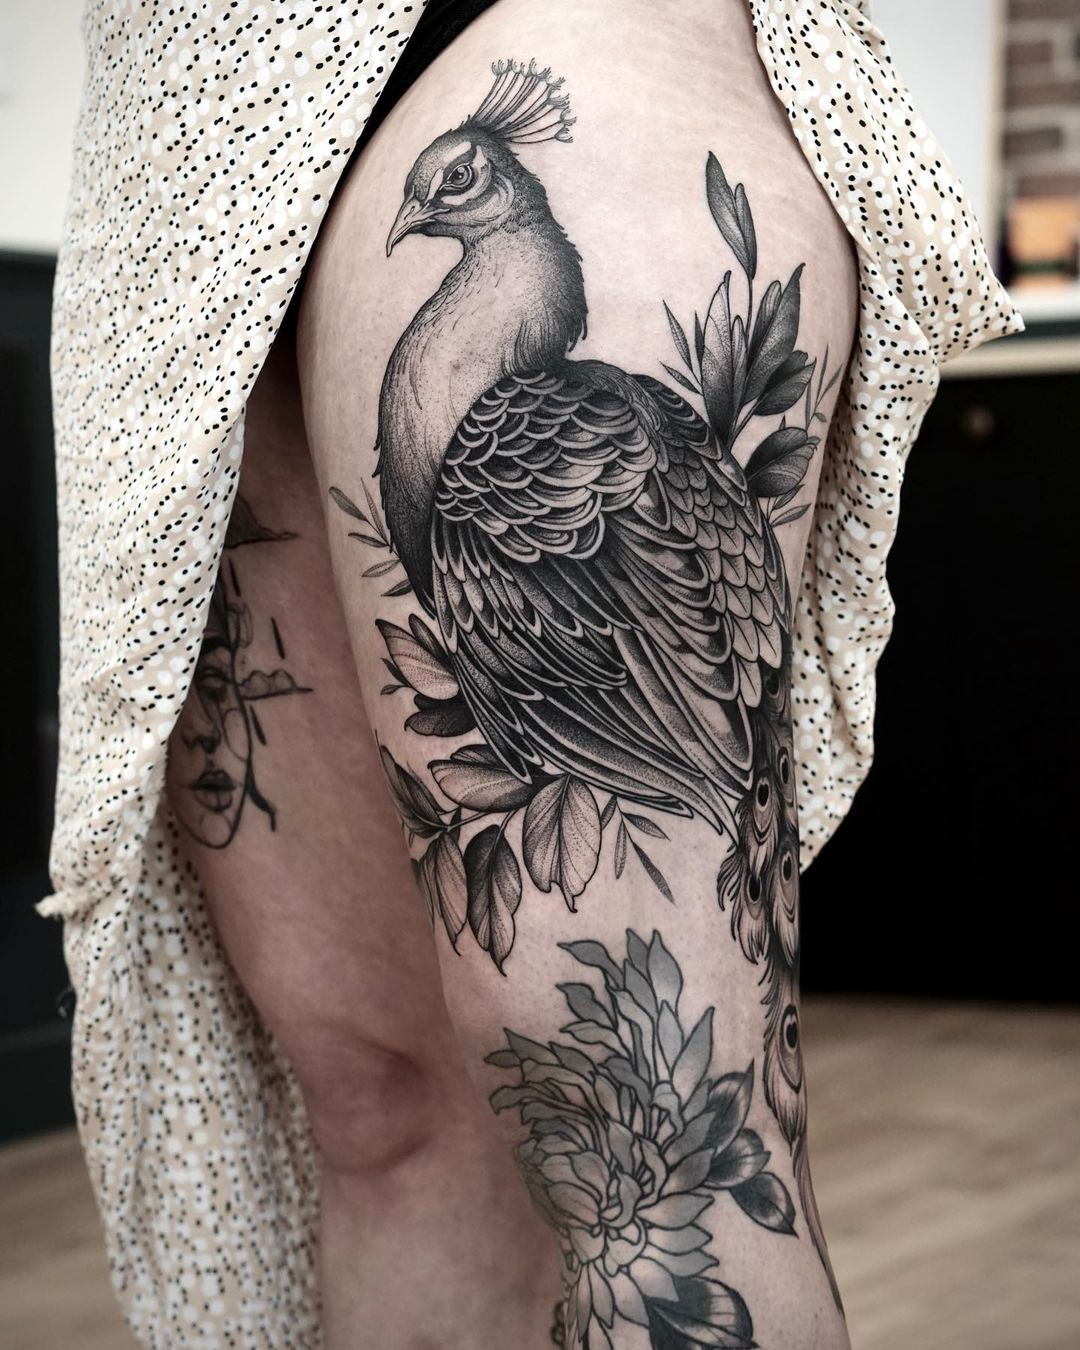 Peacock tattoo on thigh by ornela ttt